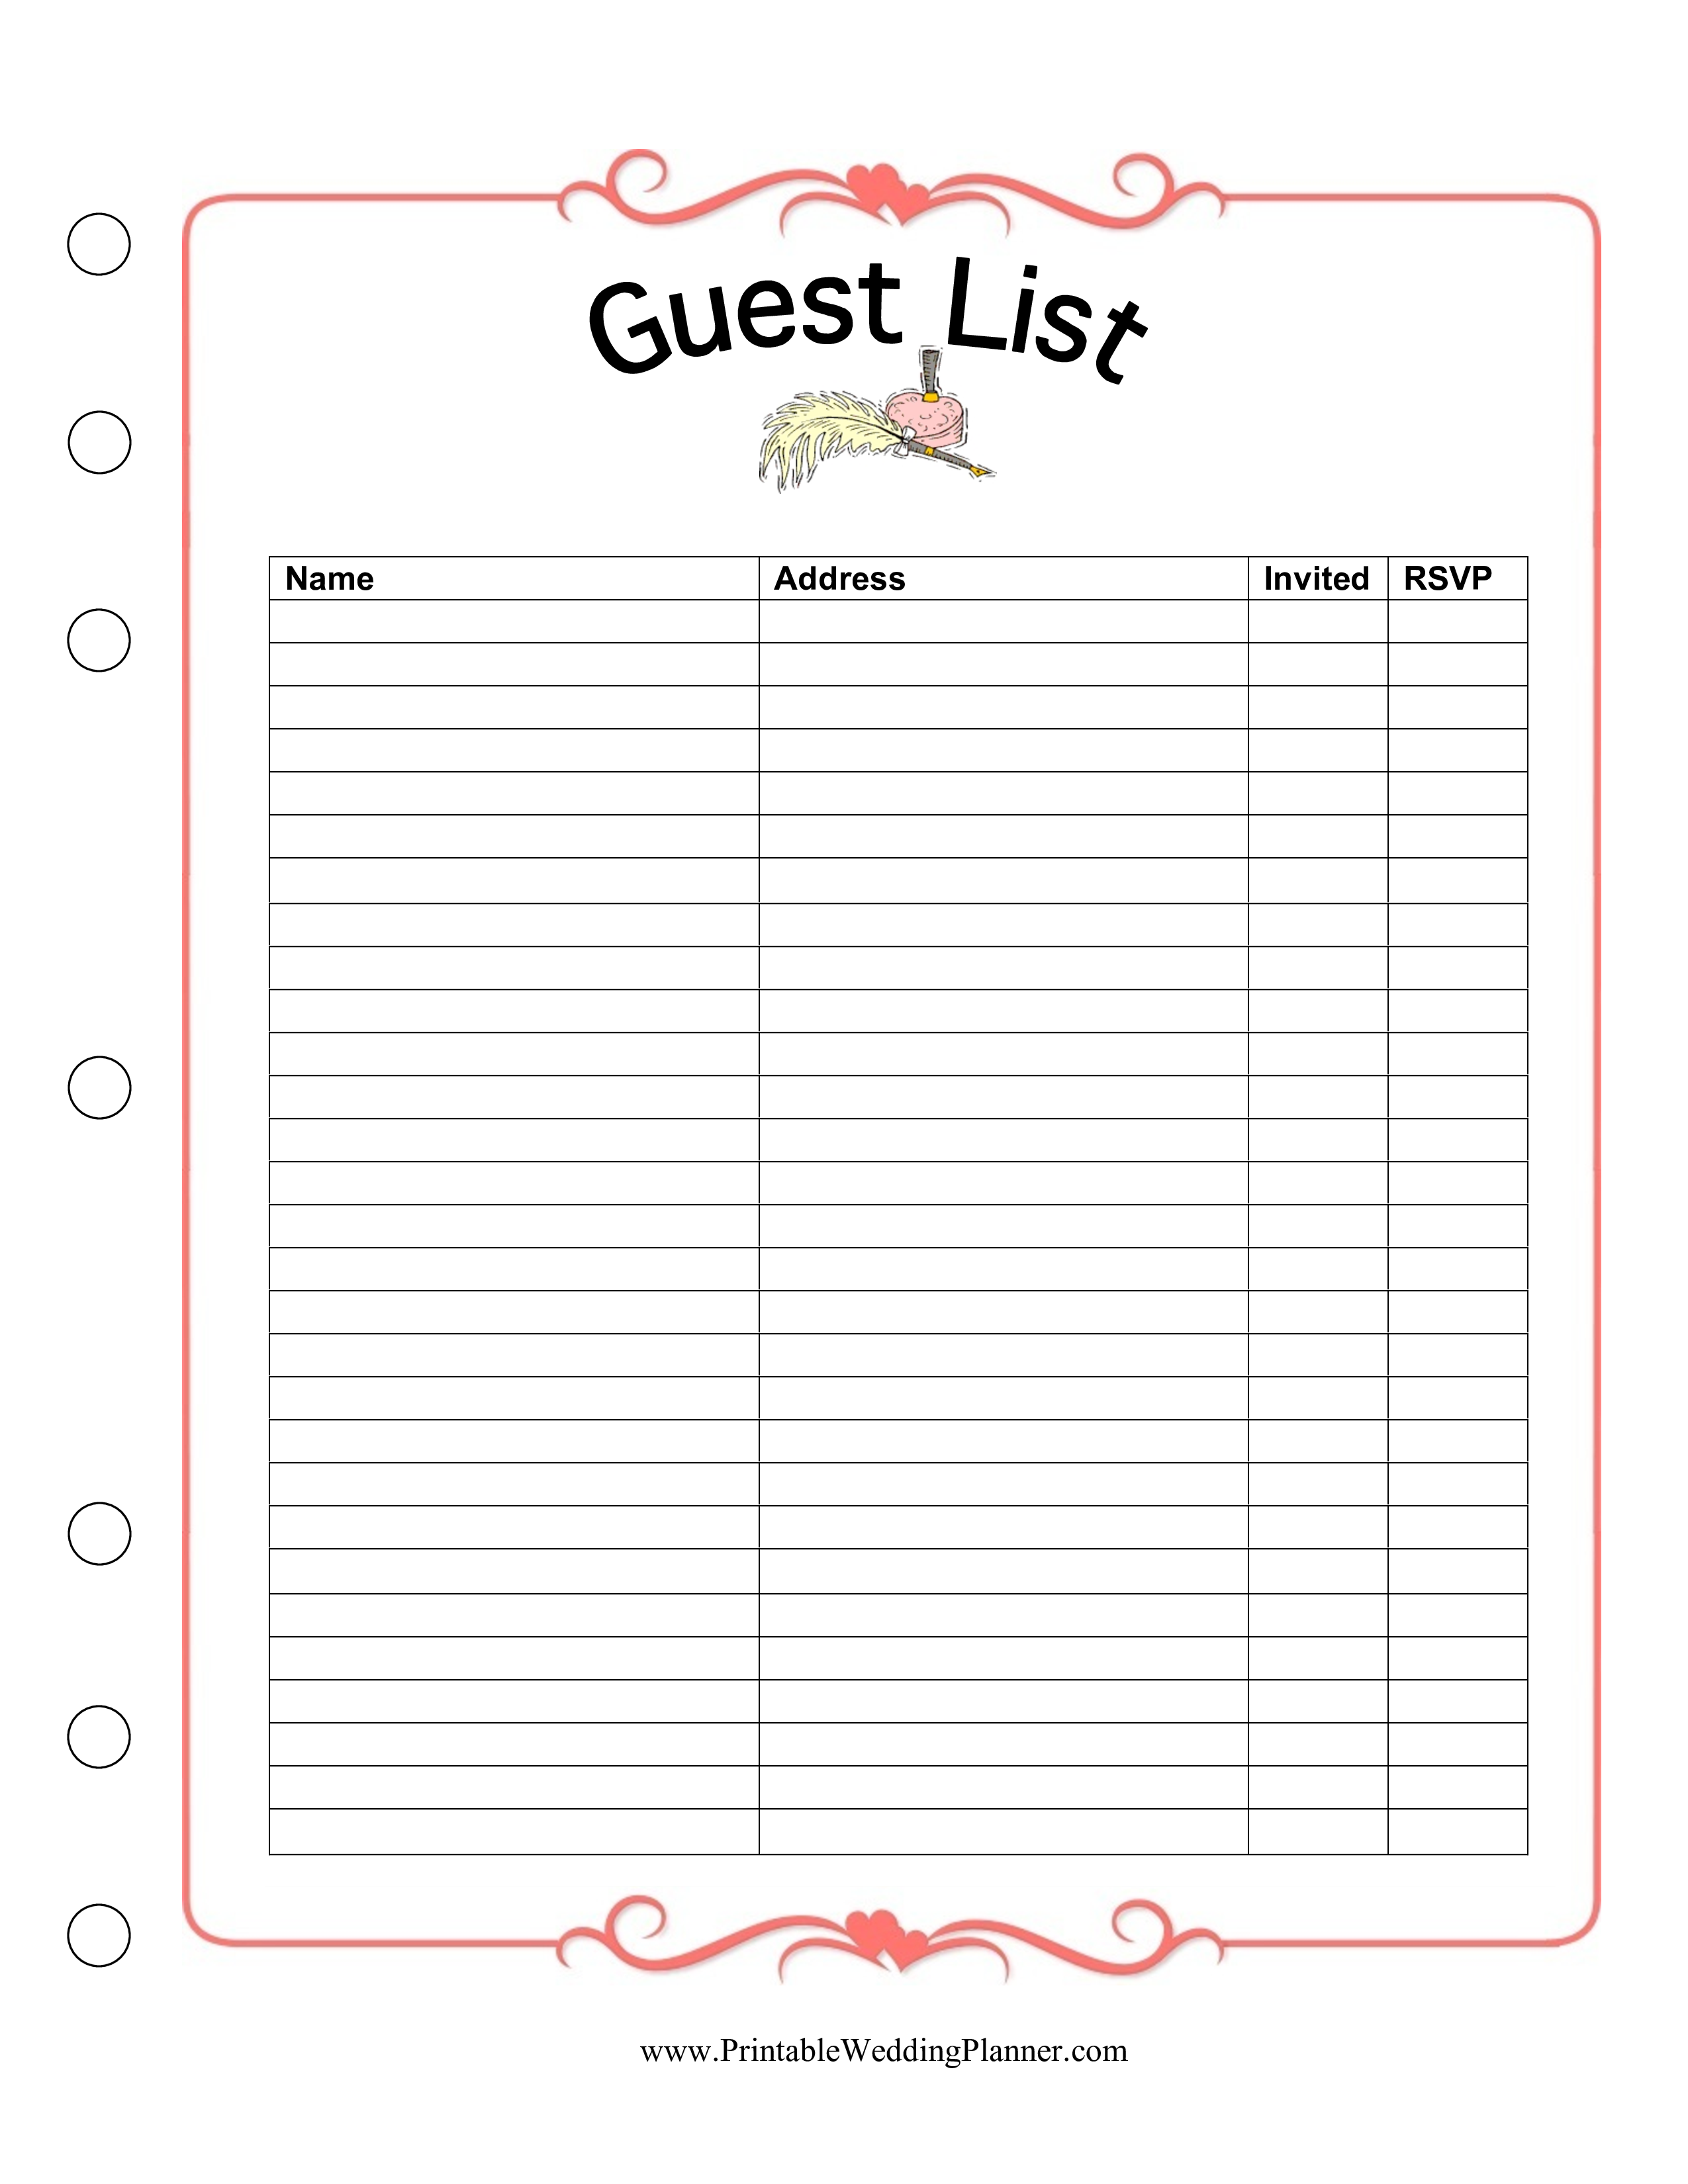 Wedding Guest List Spreadsheet main image